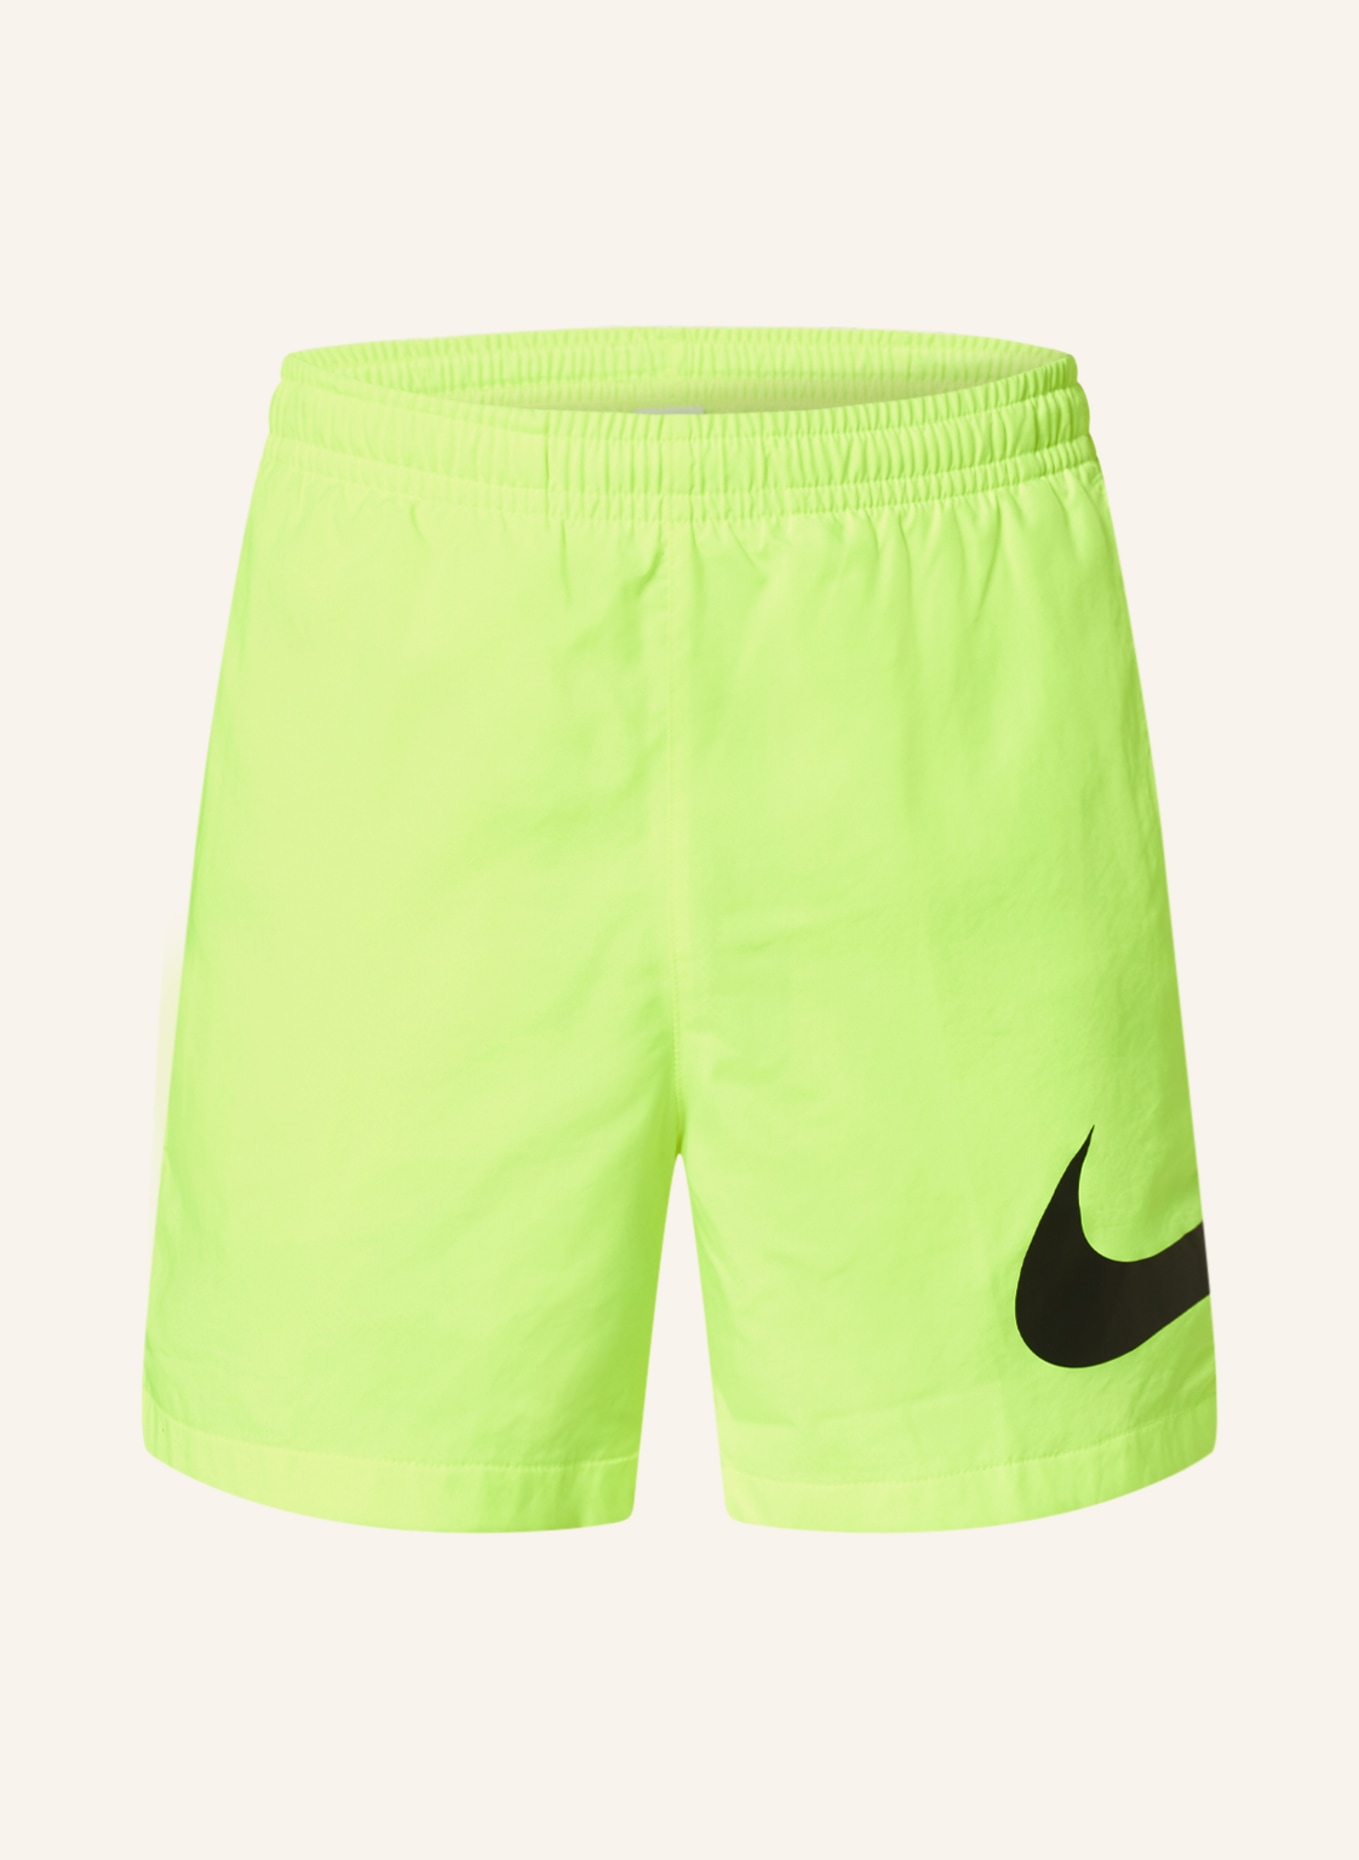 Nike Trainingsshorts REPEAT mit Mesh, Farbe: NEONGELB/ SCHWARZ (Bild 1)